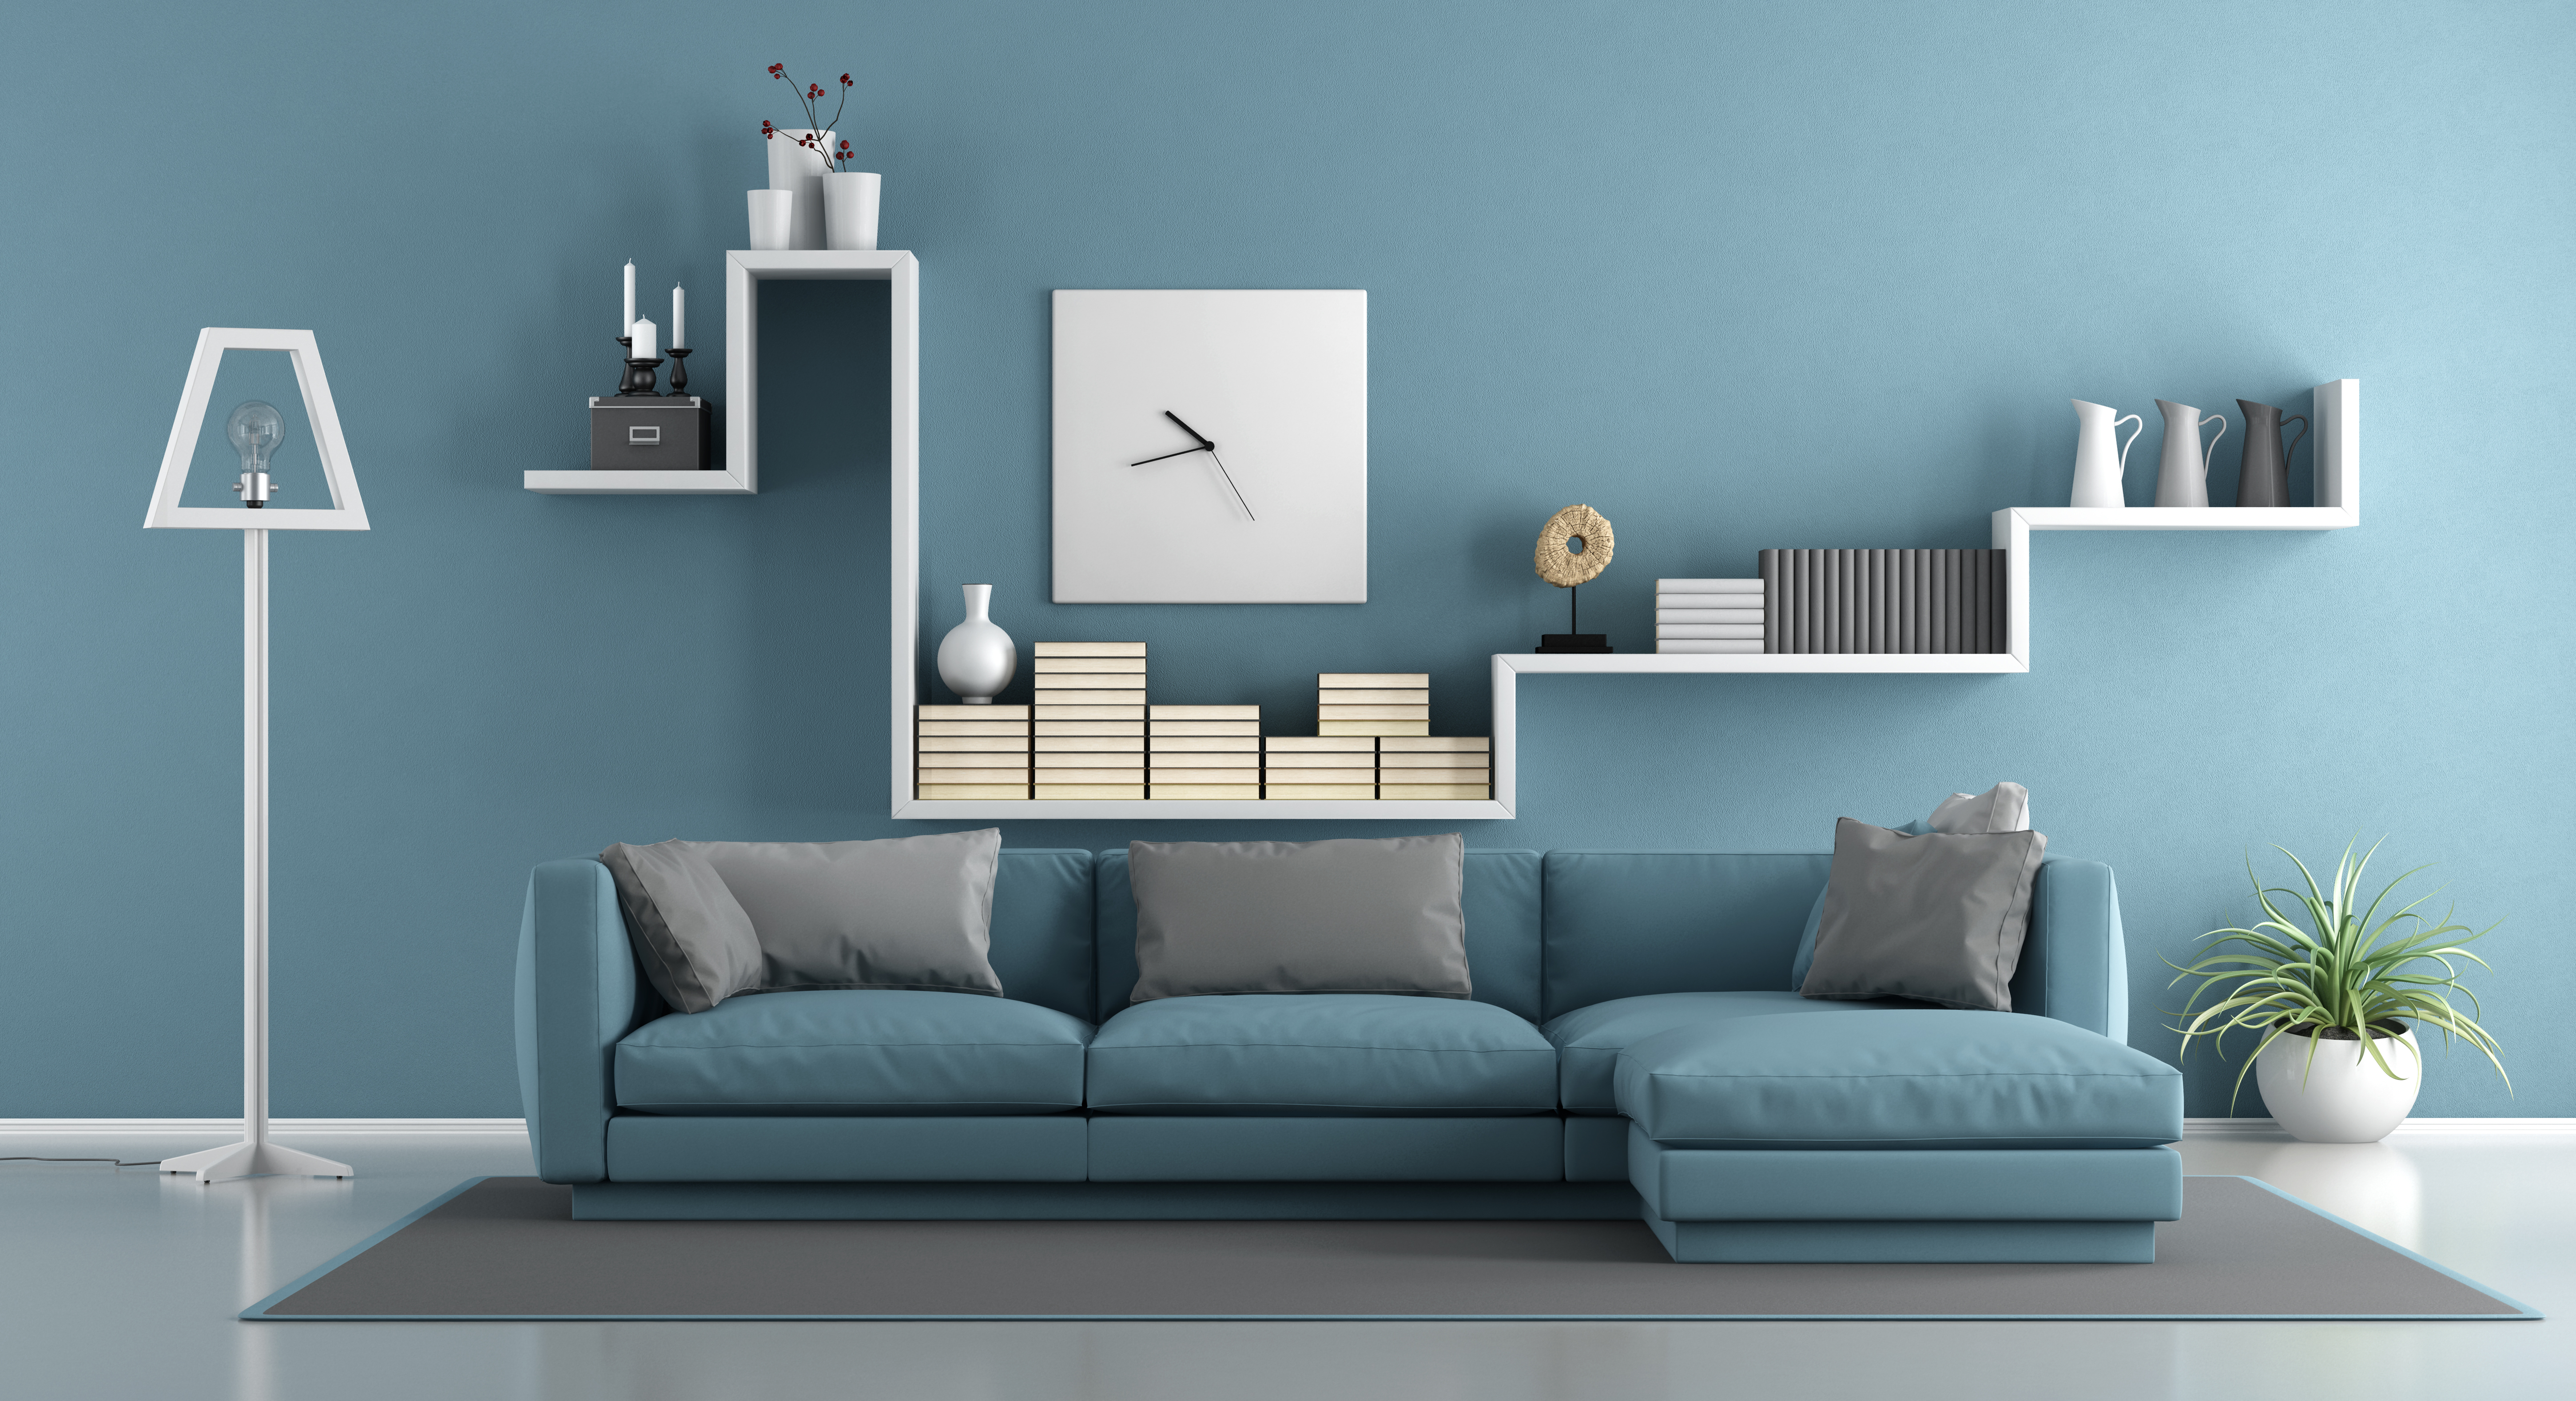 5 Minimalistic Home Living Room Interior Design Decor Ideas